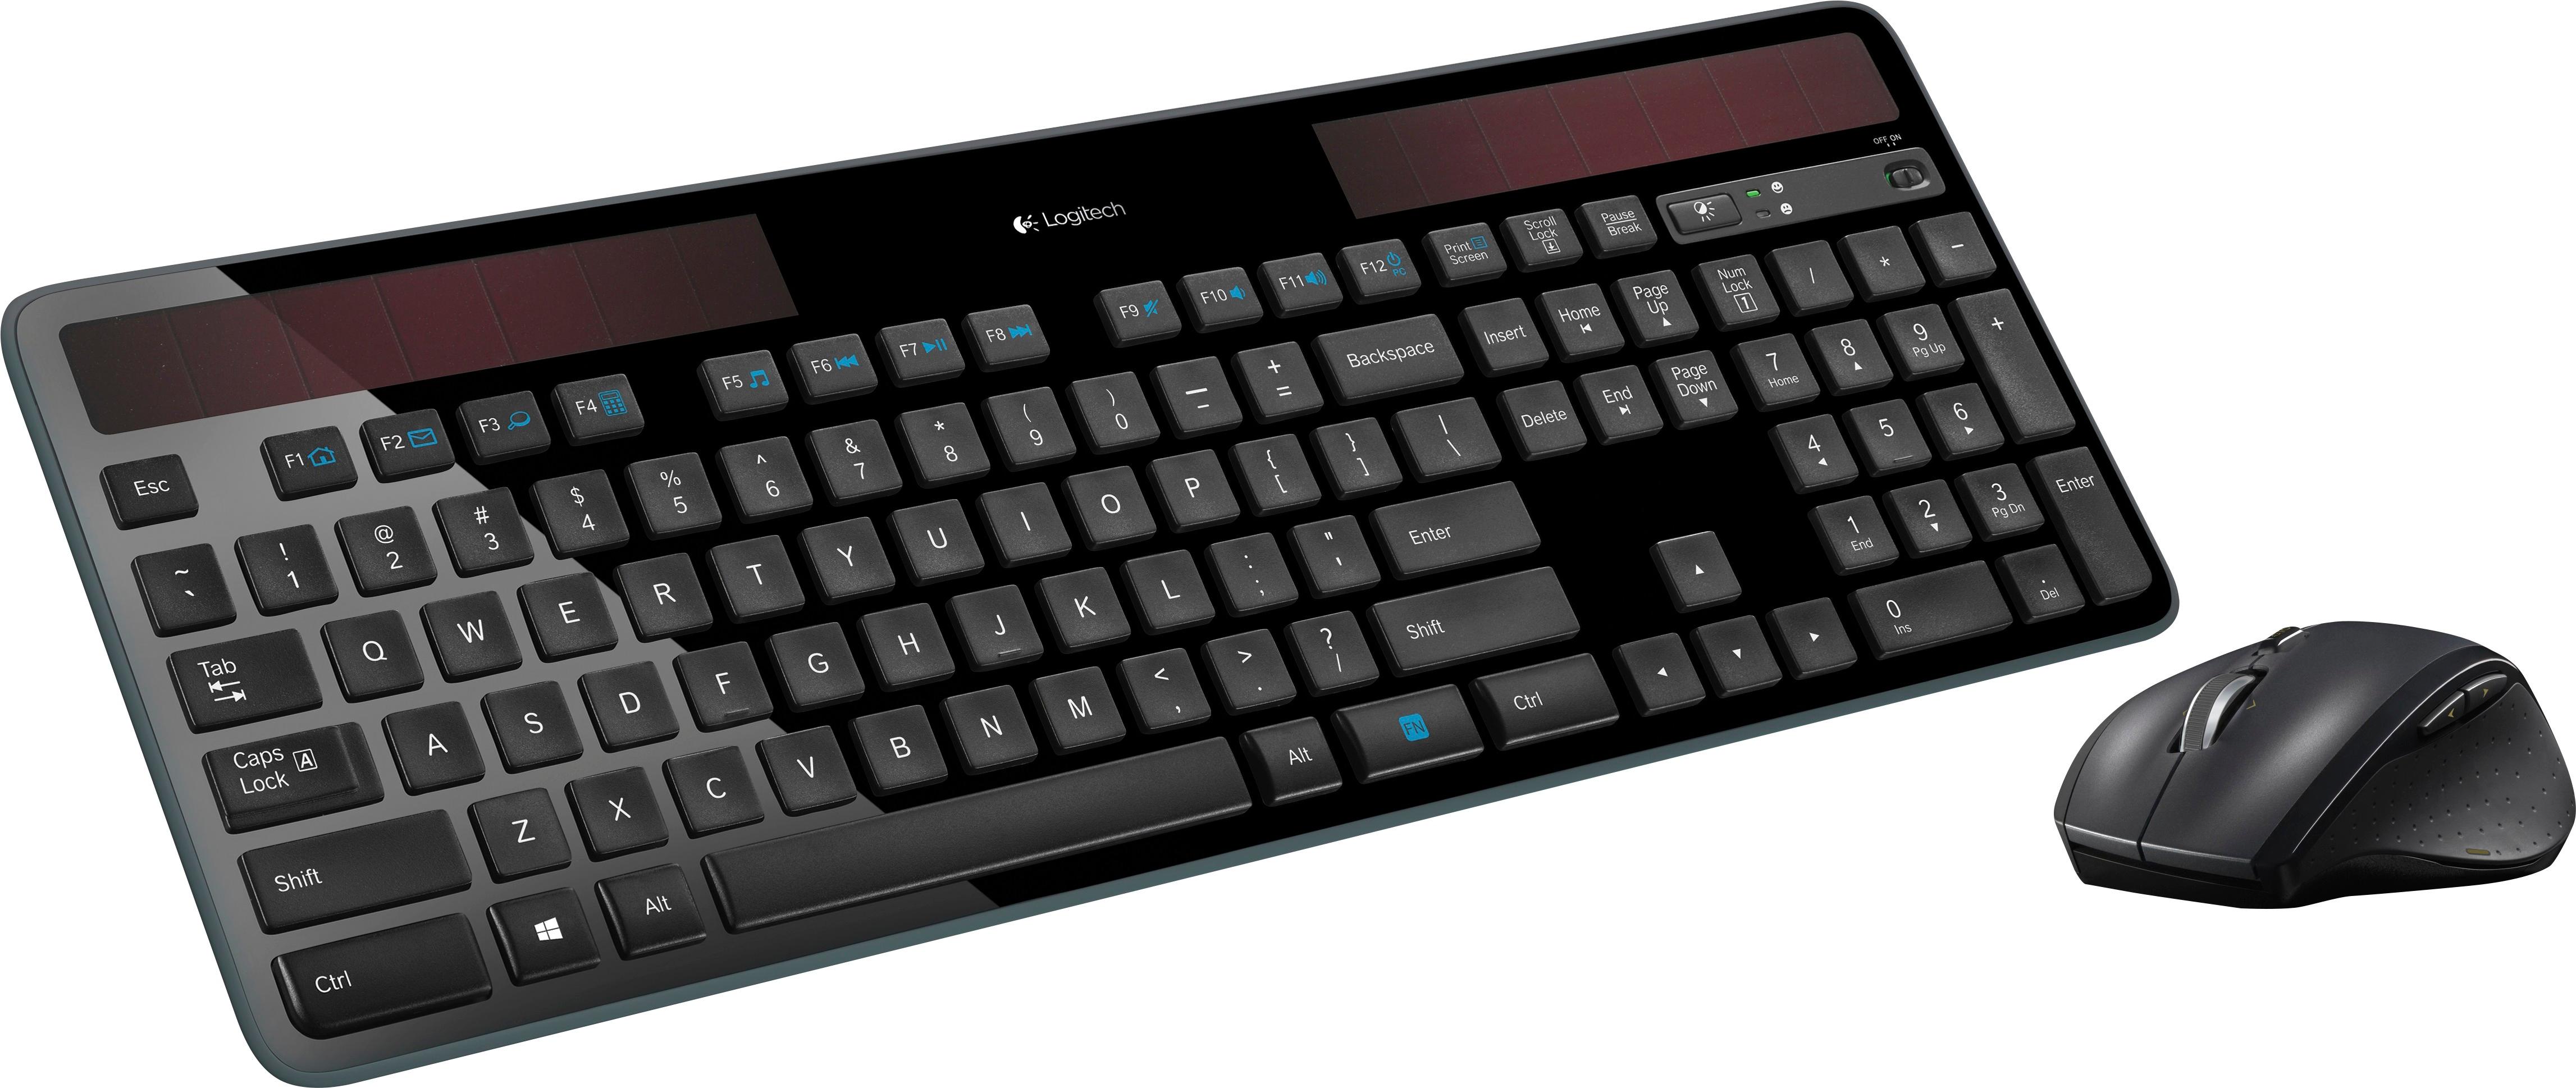 Angle View: Logitech - MK520 Wireless Keyboard and Mouse Combo - Black